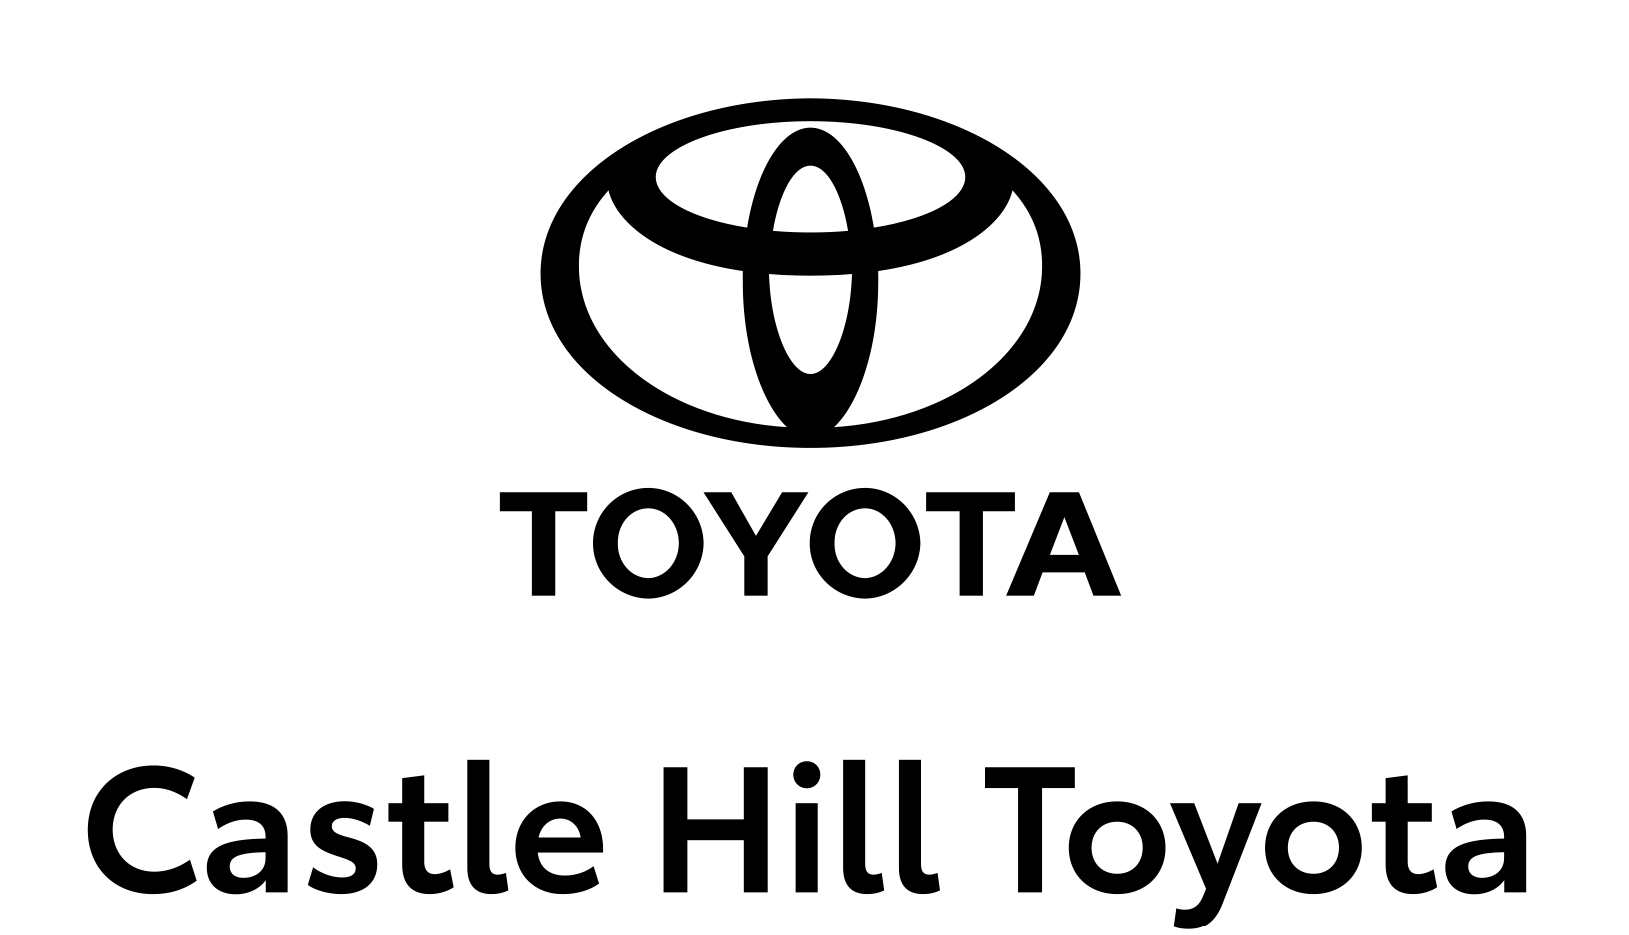 Castle Hill Toyota lpartner.png